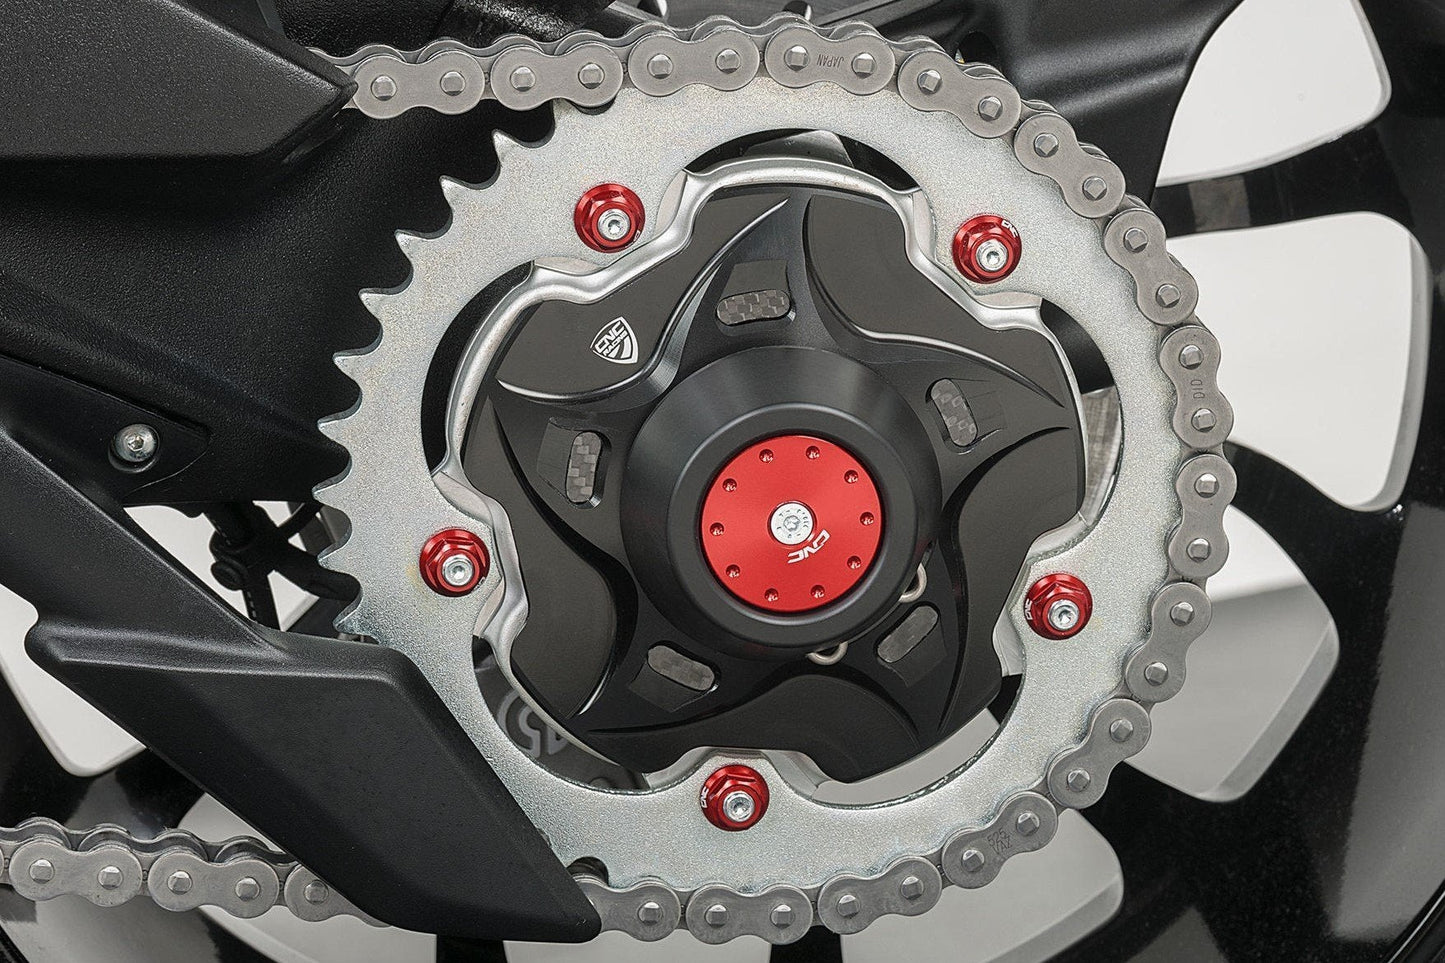 DA385 - CNC RACING Ducati Gear Ring Nuts (M8x1.25)